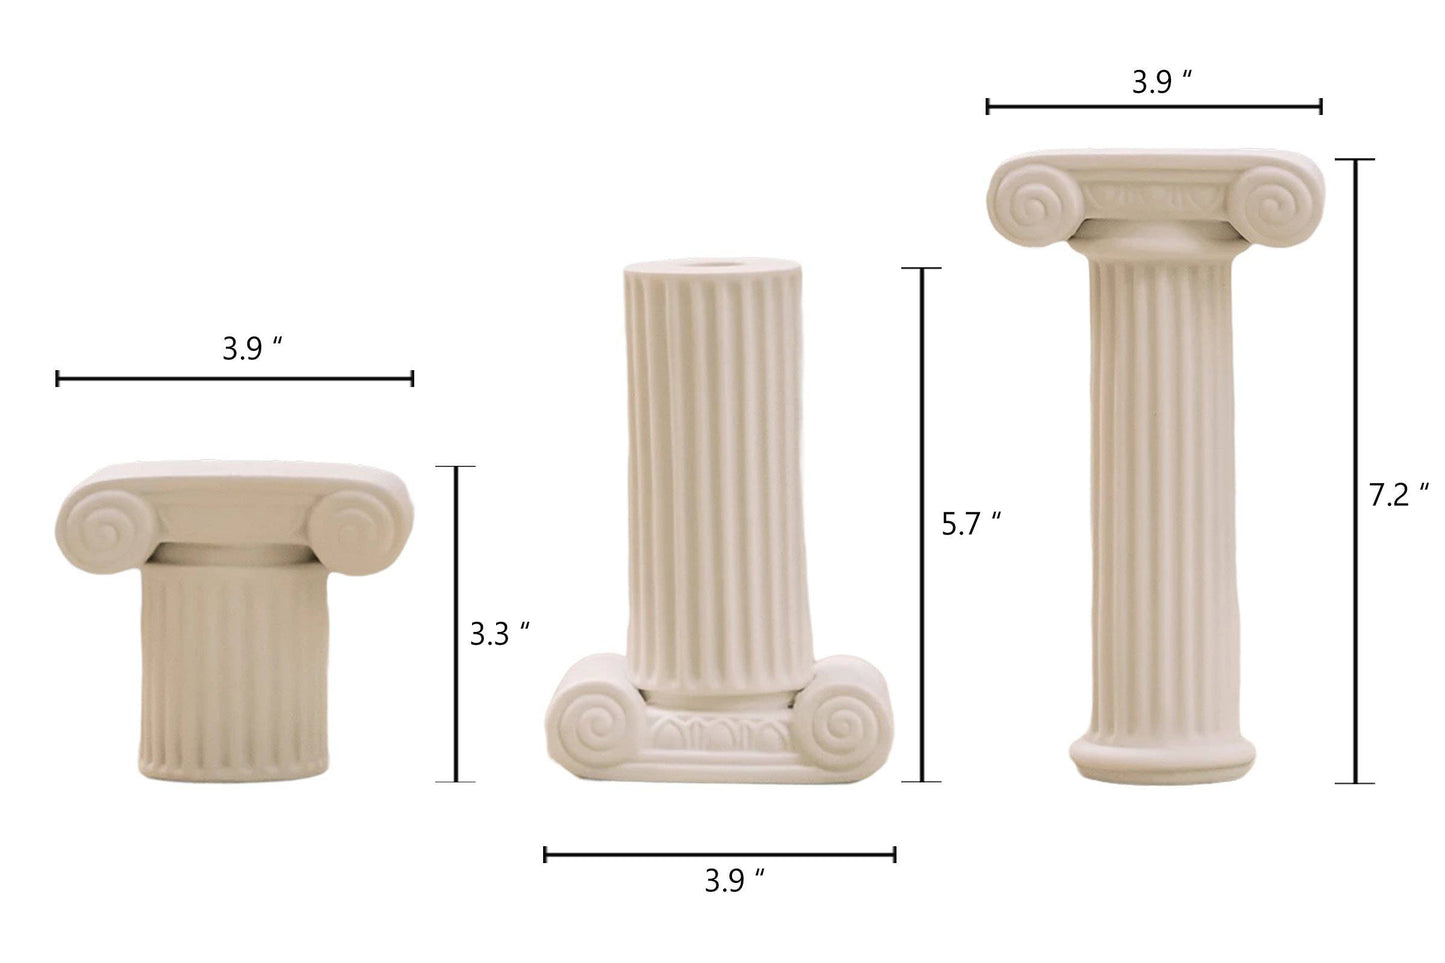 Home Decor Modern White Pillar Ceramic Candle Holders (set of 3) - The Decor Circle